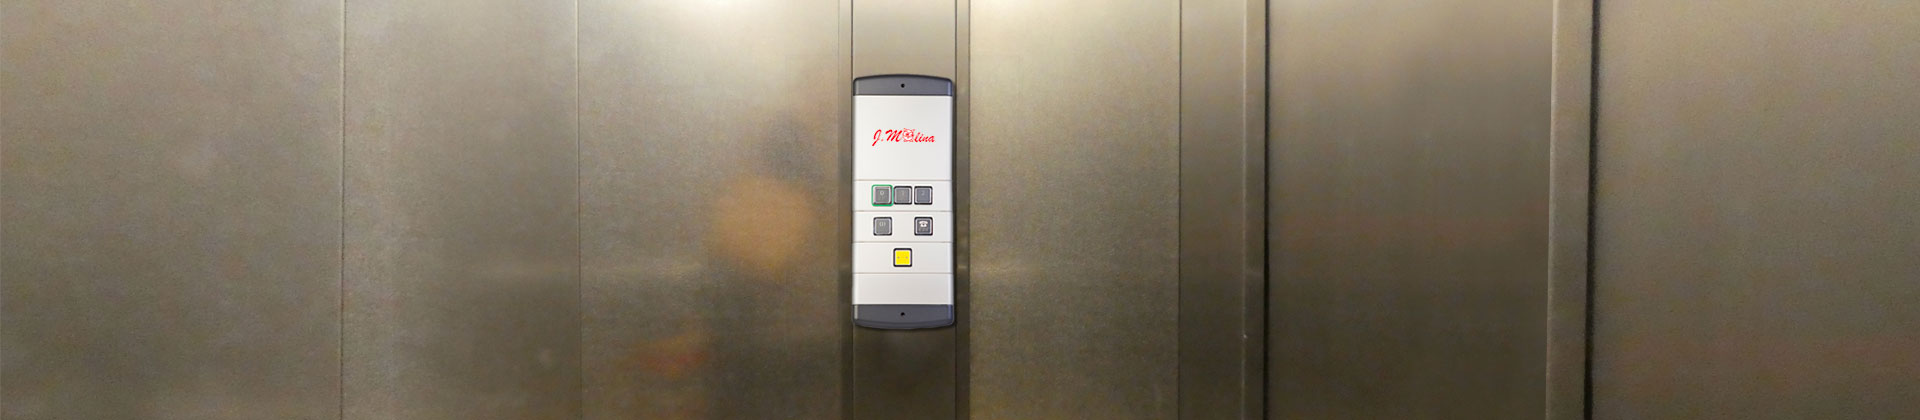 Componentes para ascensores JMolina